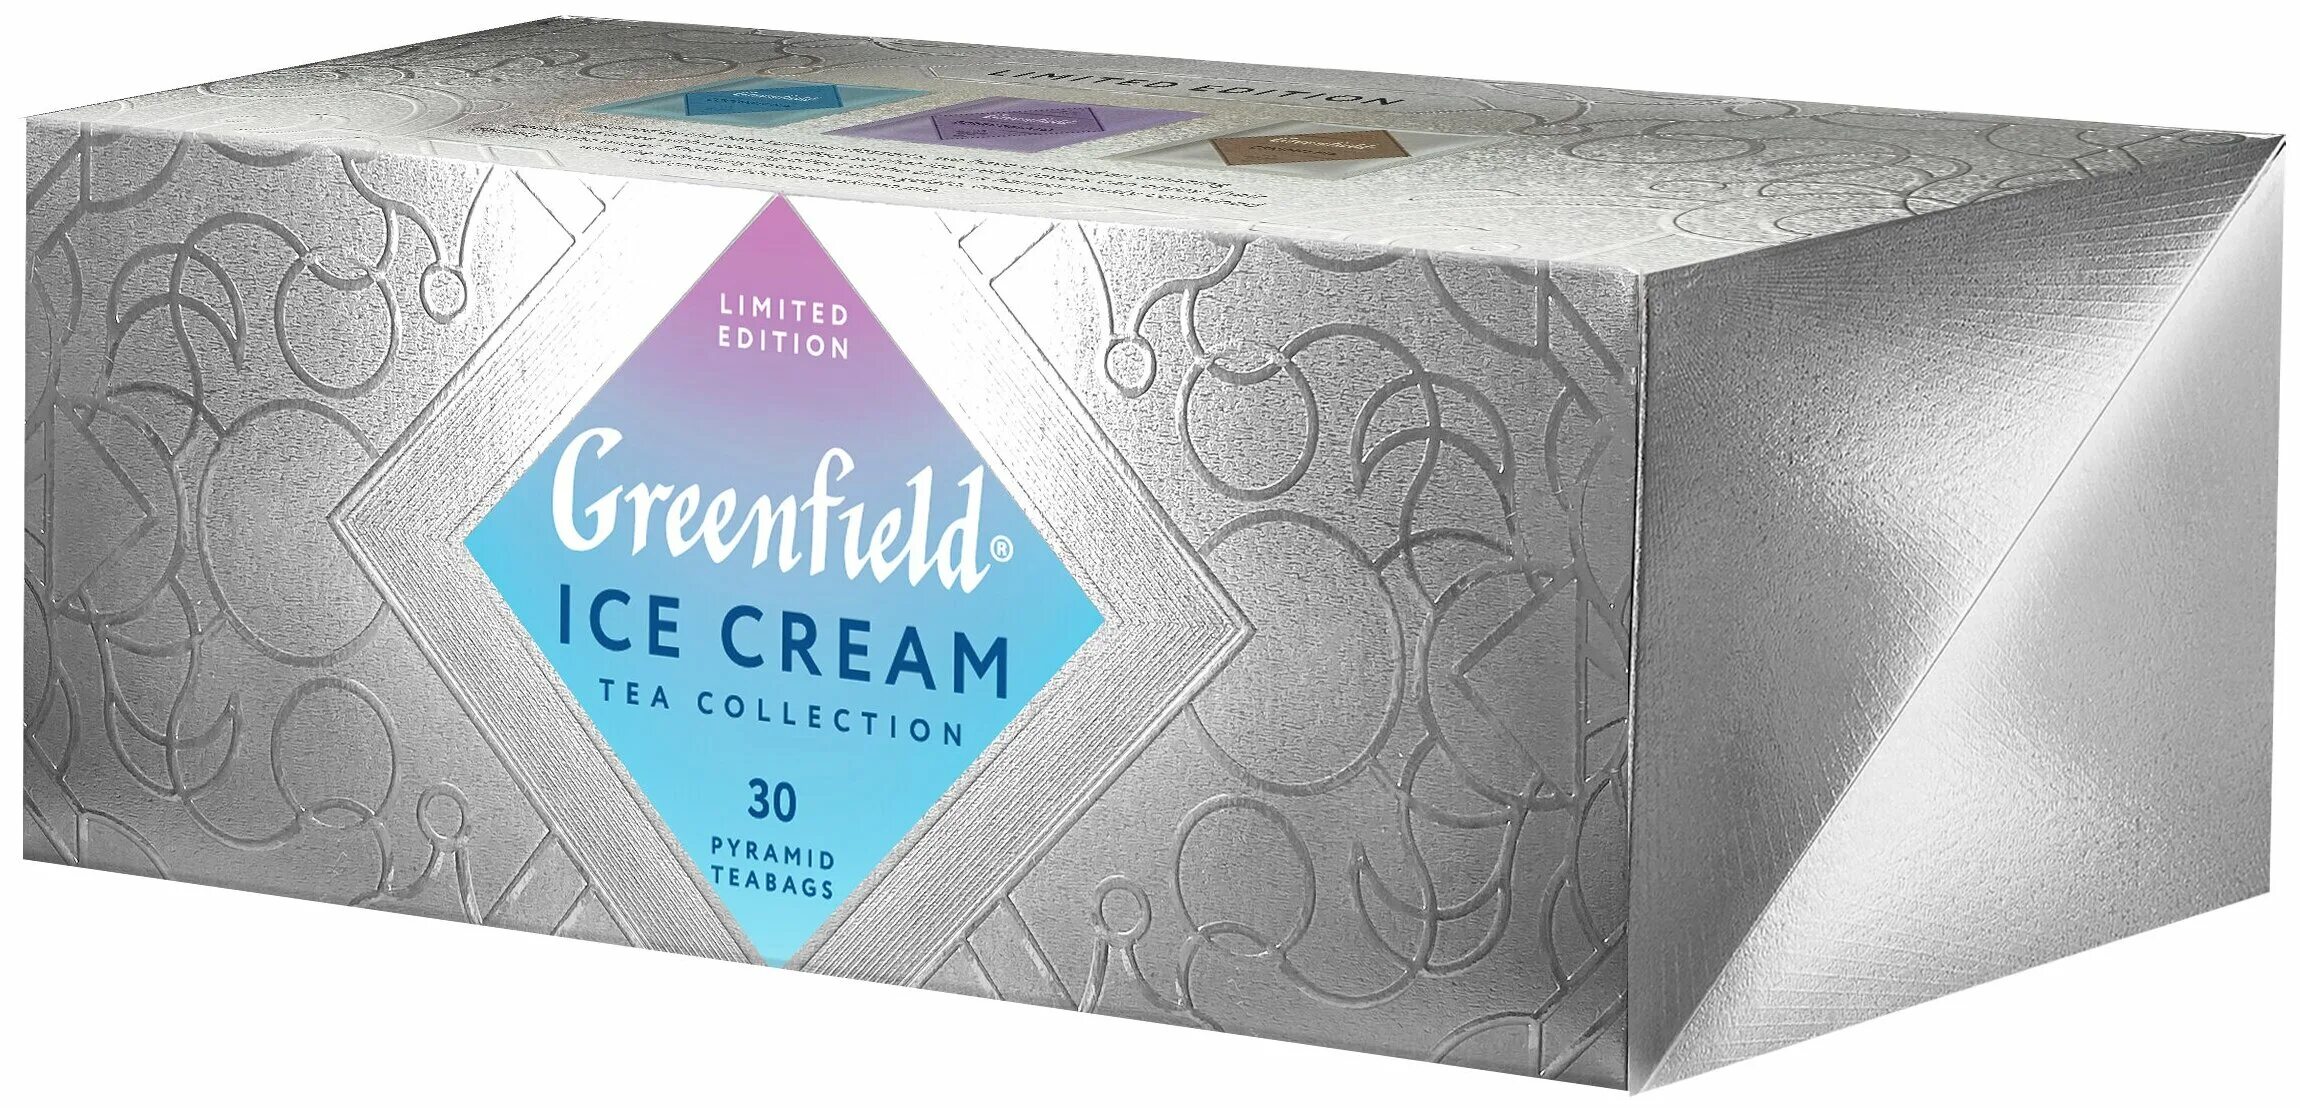 Дав айс. Чай черный Greenfield Limited Edition Ice Cream. Гринфилд Ice Cream набор. Гринфилд Limited Edition. Чай Гринфилд Coconut Ice.